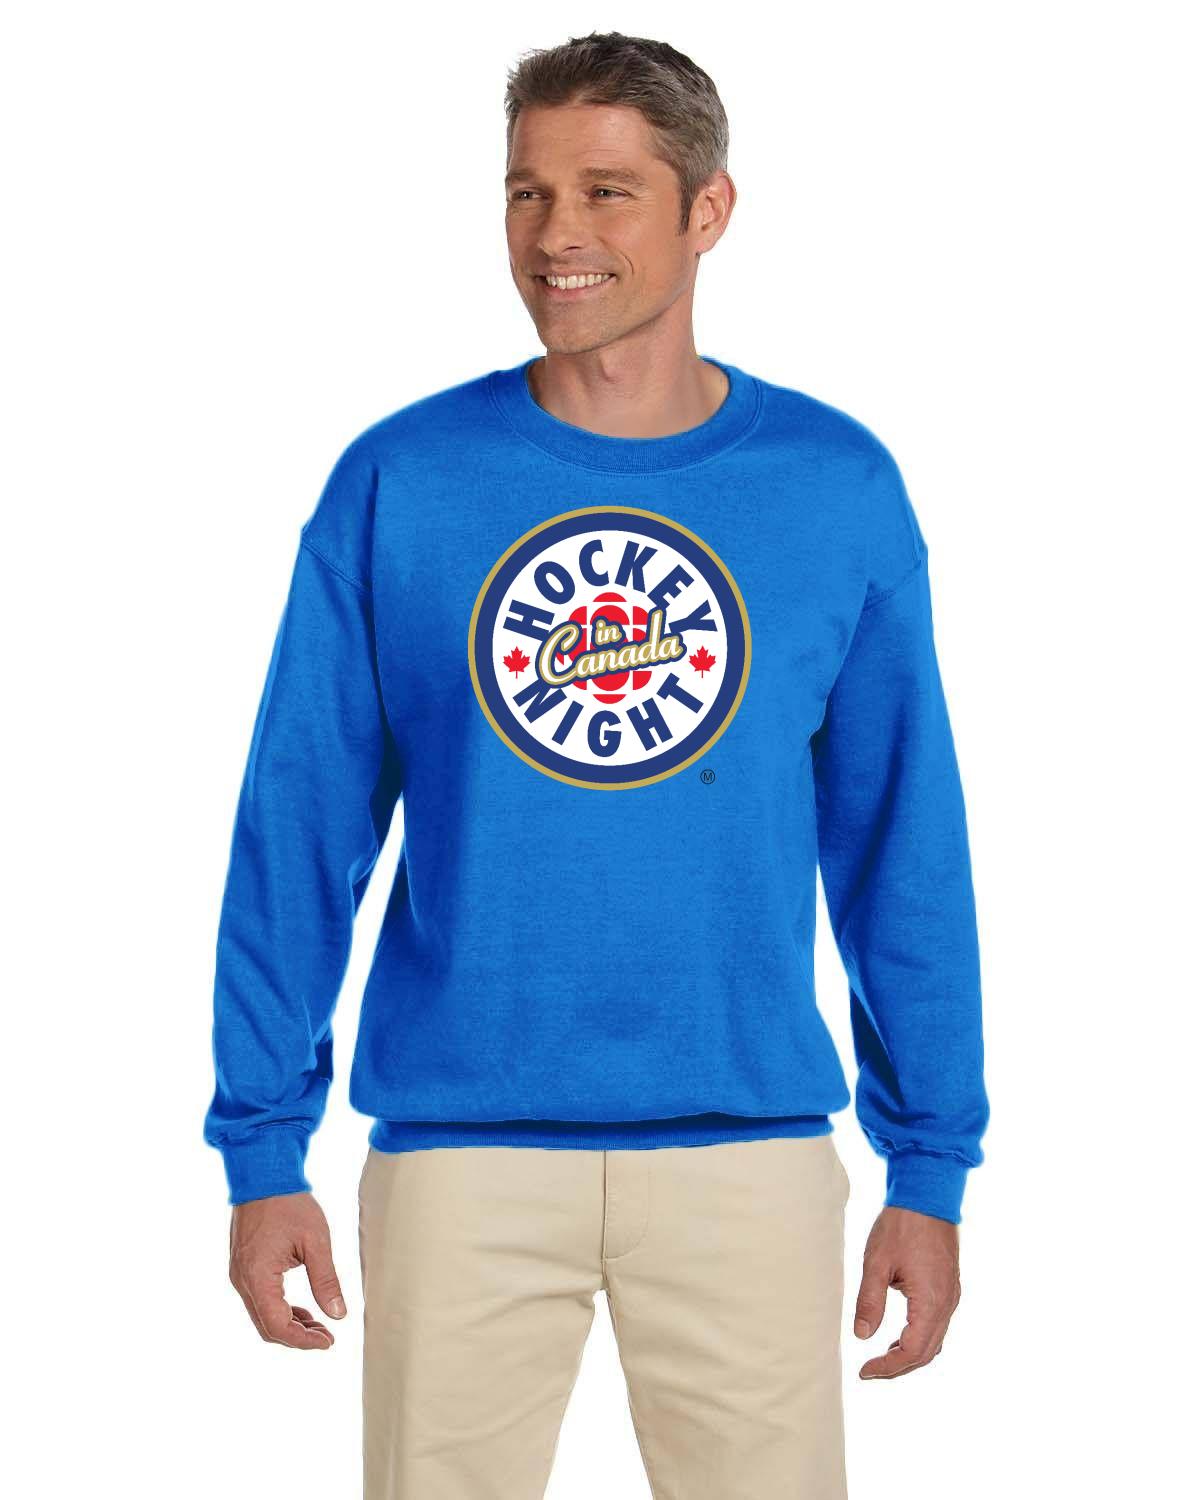 Hockey Night In Canada No Shadow Logo, Hockey Sweatshirt, HNIC Sweatshirt - Officially Licensed CBC Apparel